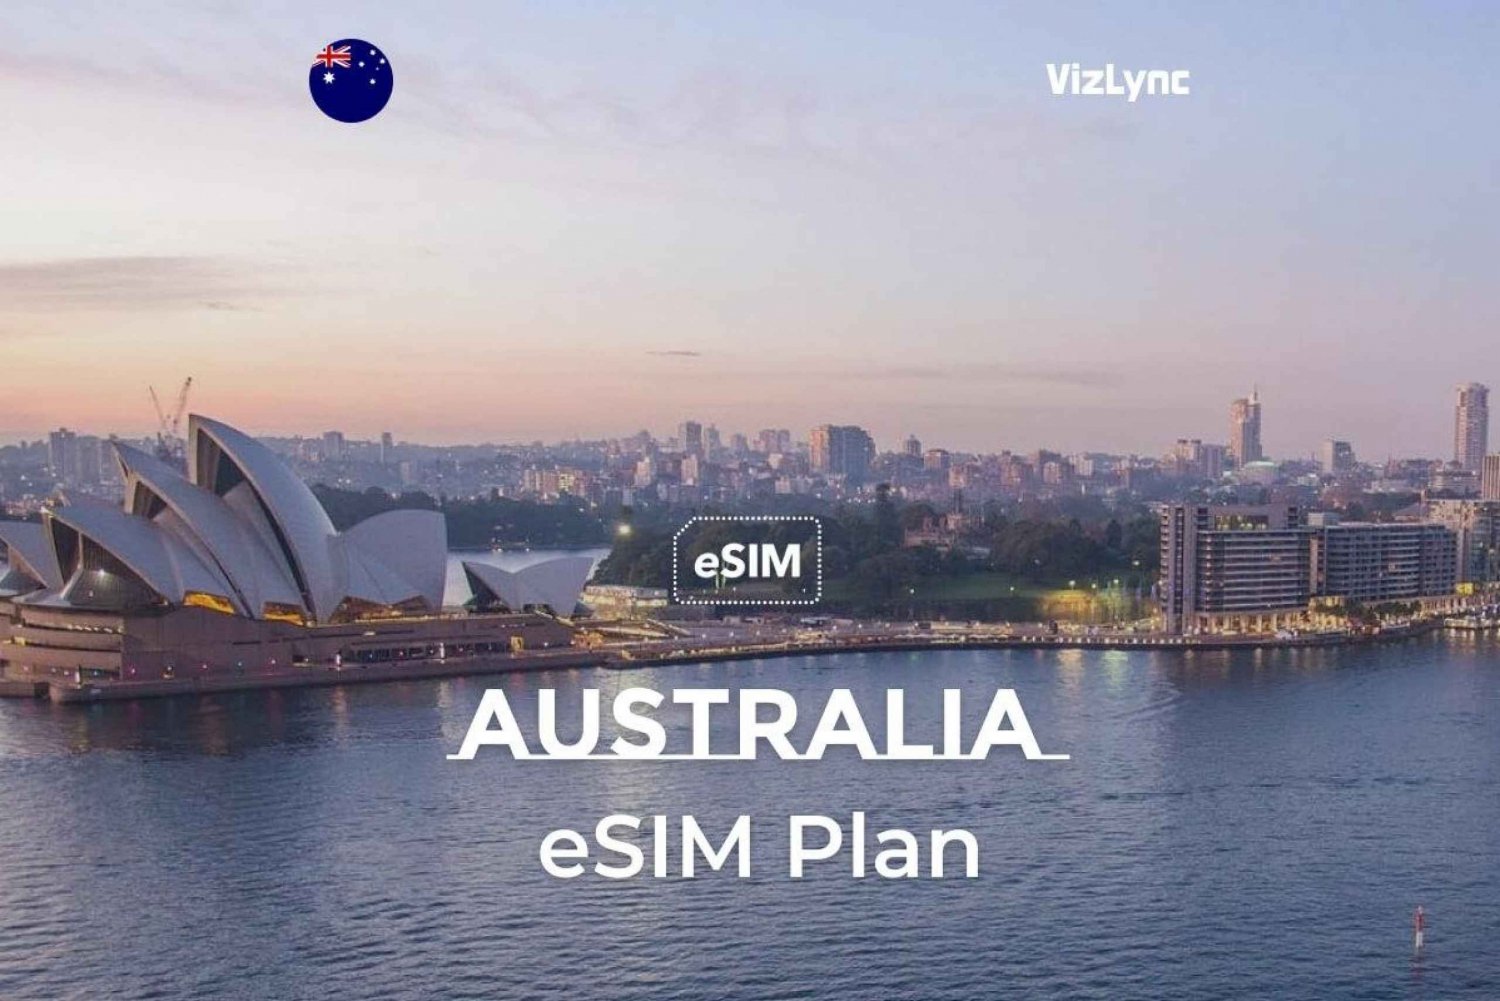 Australia: Travel eSIM plan with Super fast Mobile Data